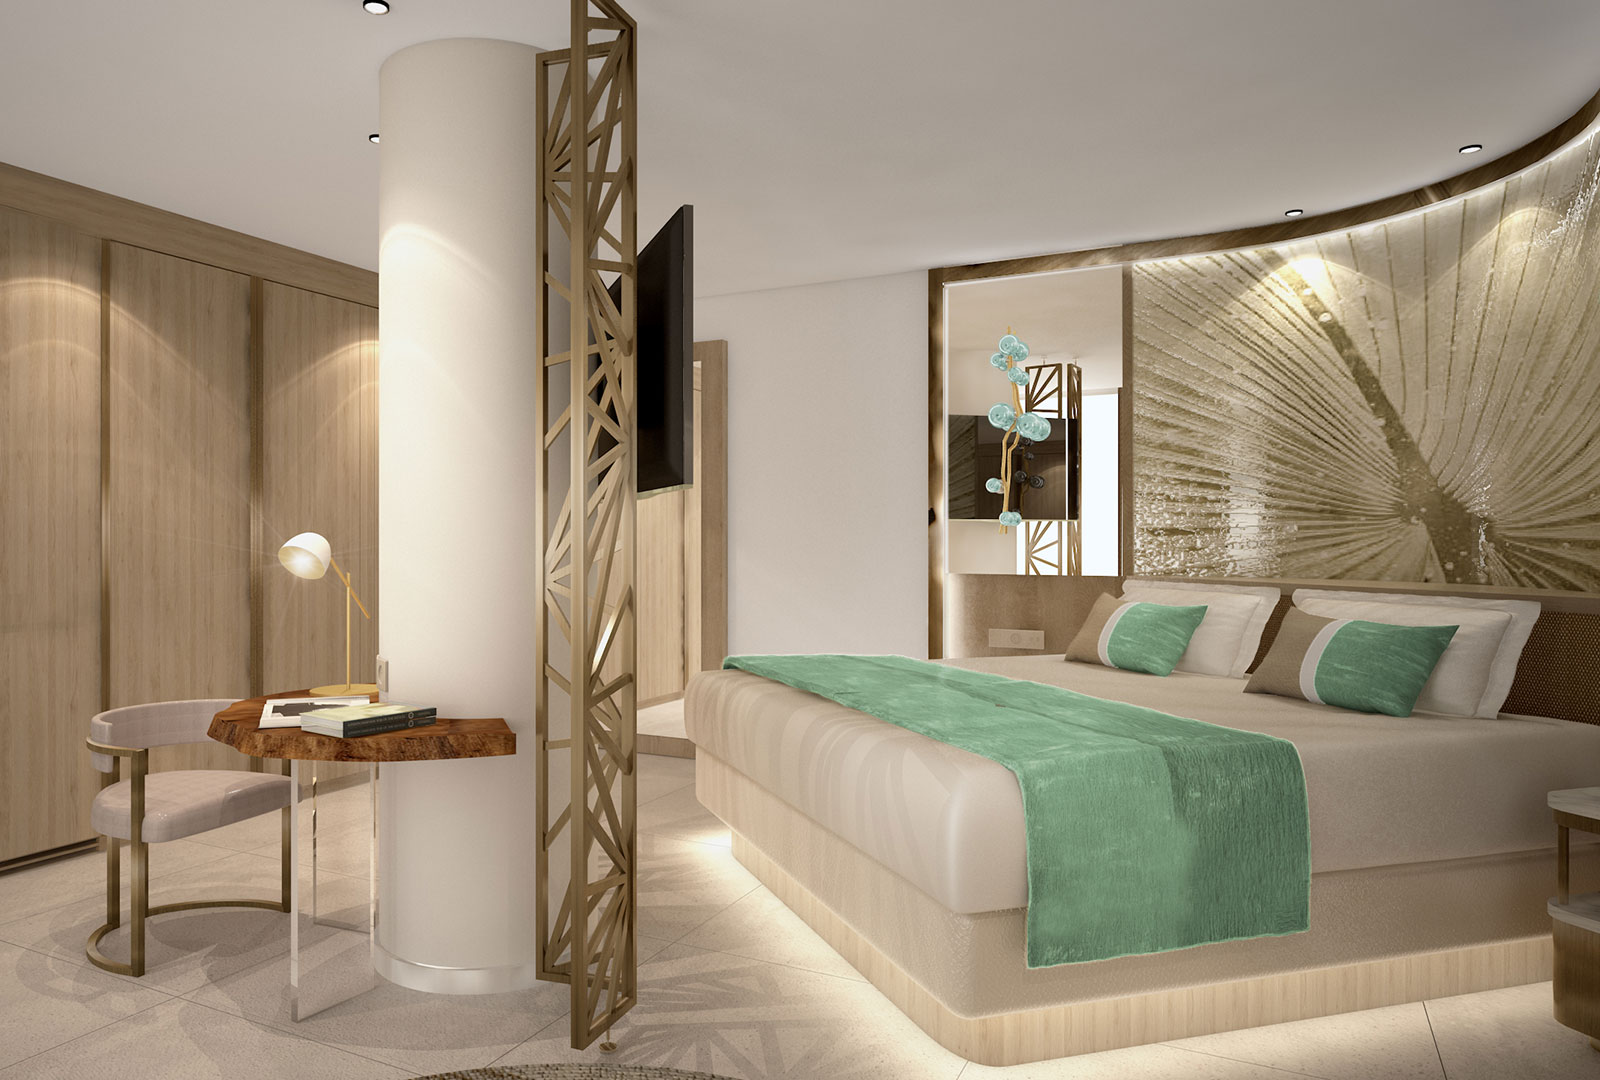 Robert de Niro eröffnet Luxus Hotel auf Ibiza 4